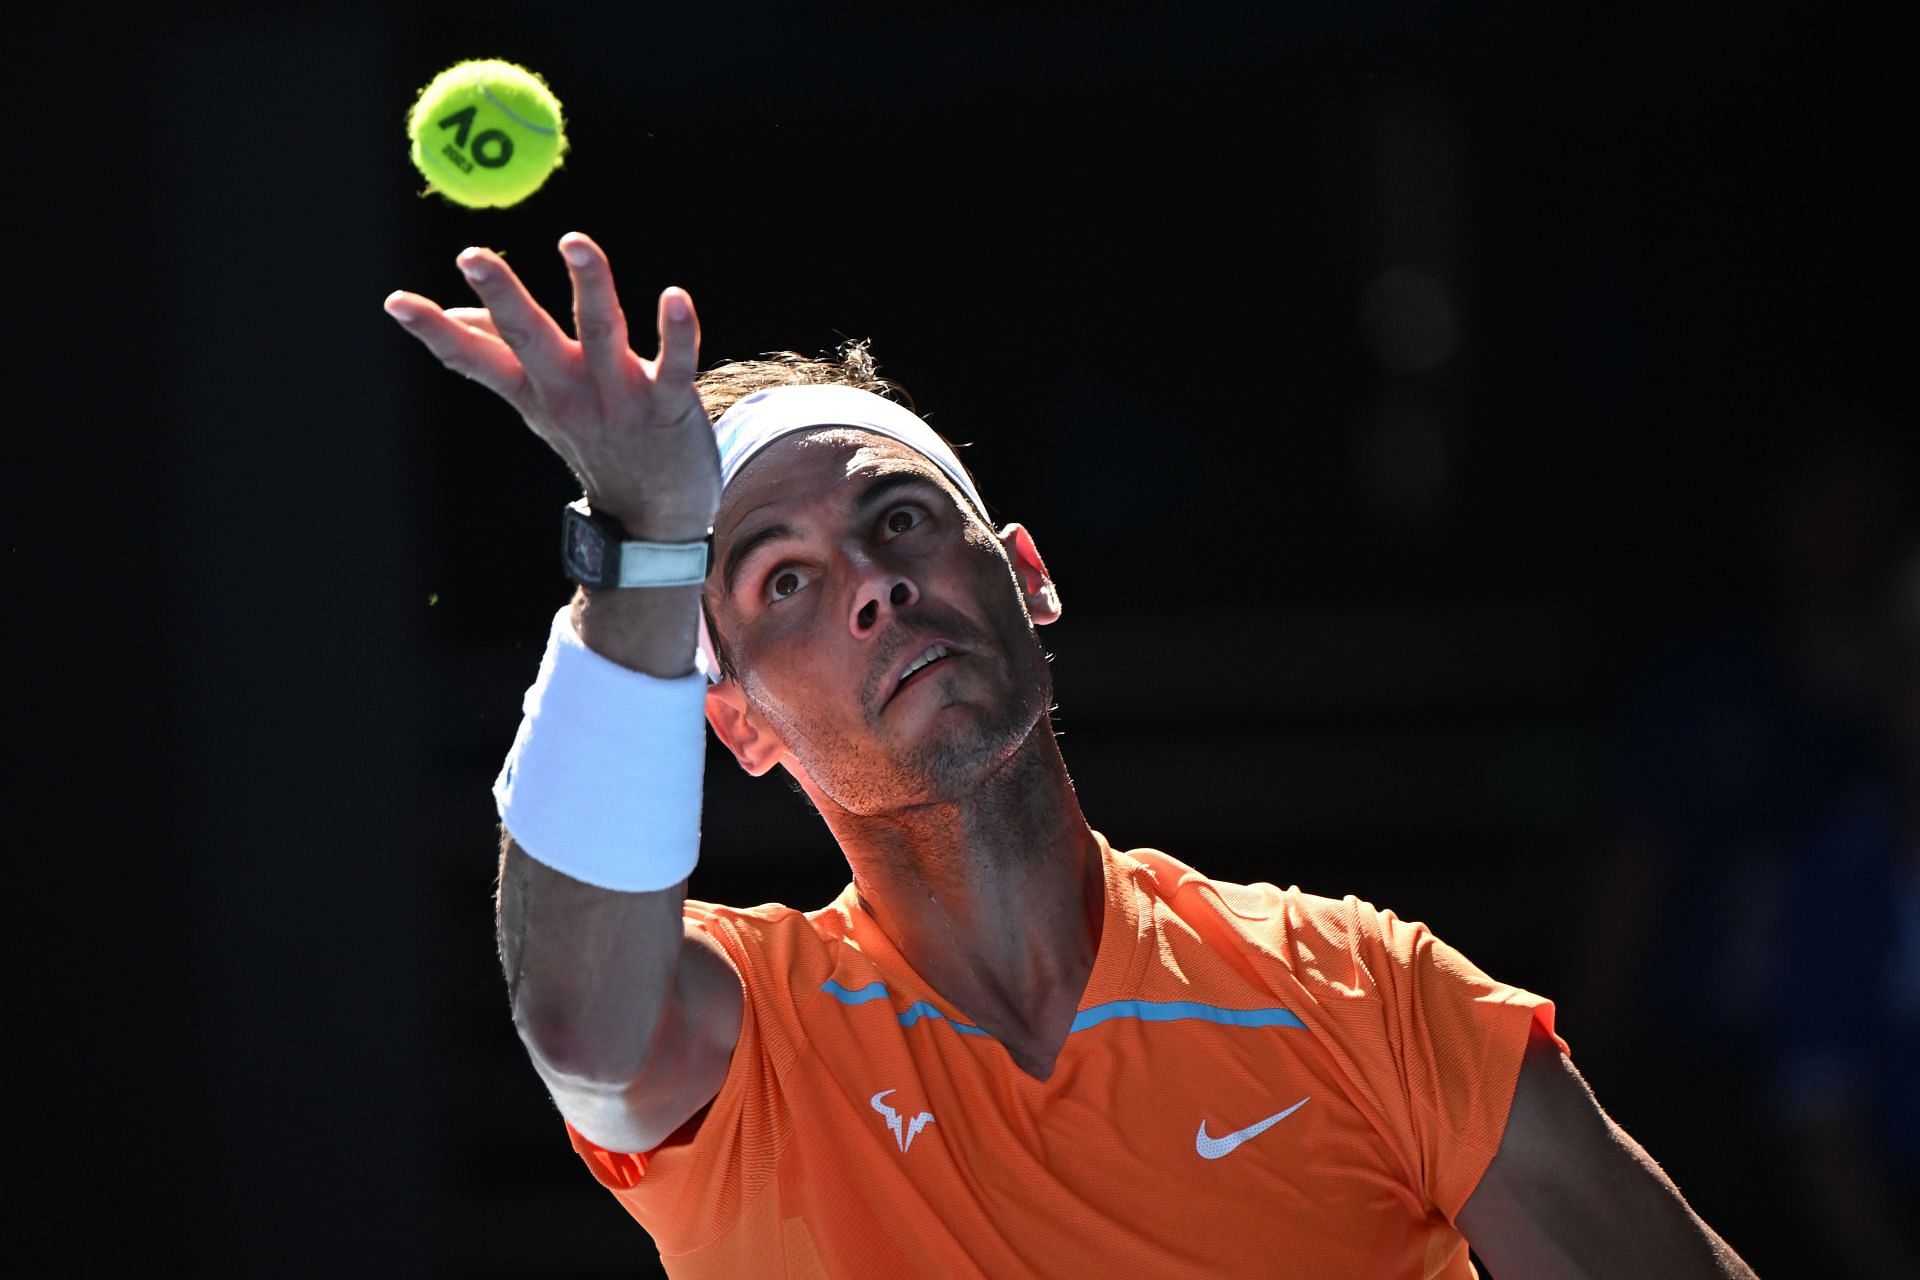 Rafael Nadal serves at the Australian Open 2023